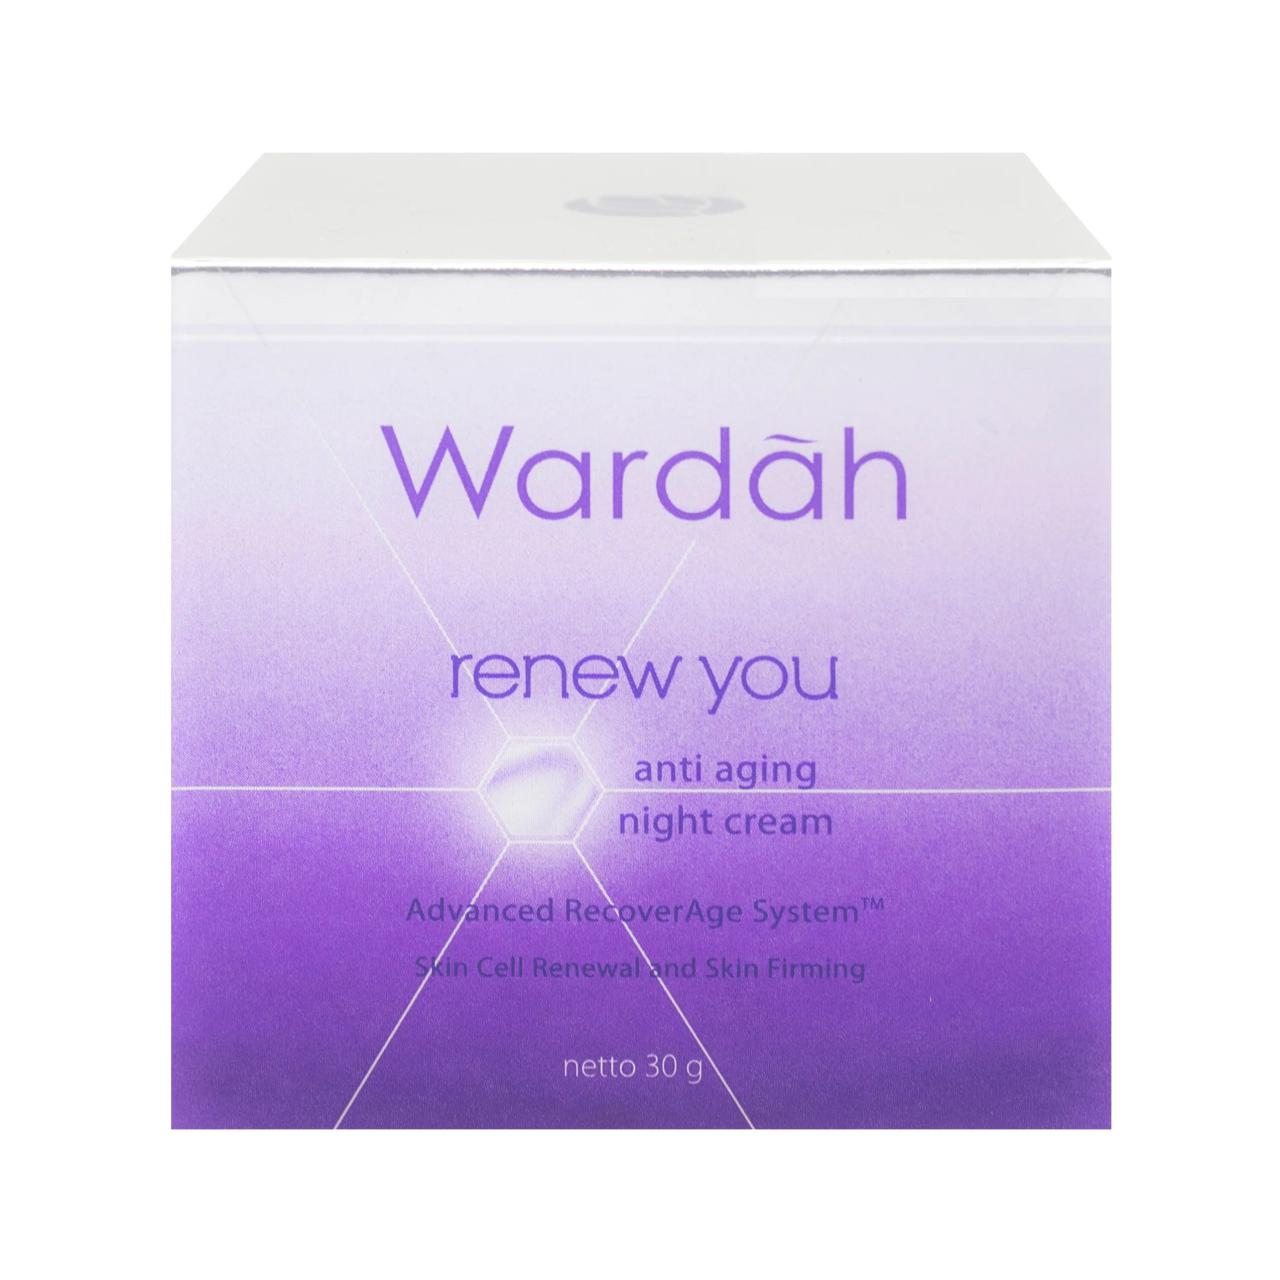 Cek Ingredients Wardah Renew You Anti Aging Night Cream Formula Baru